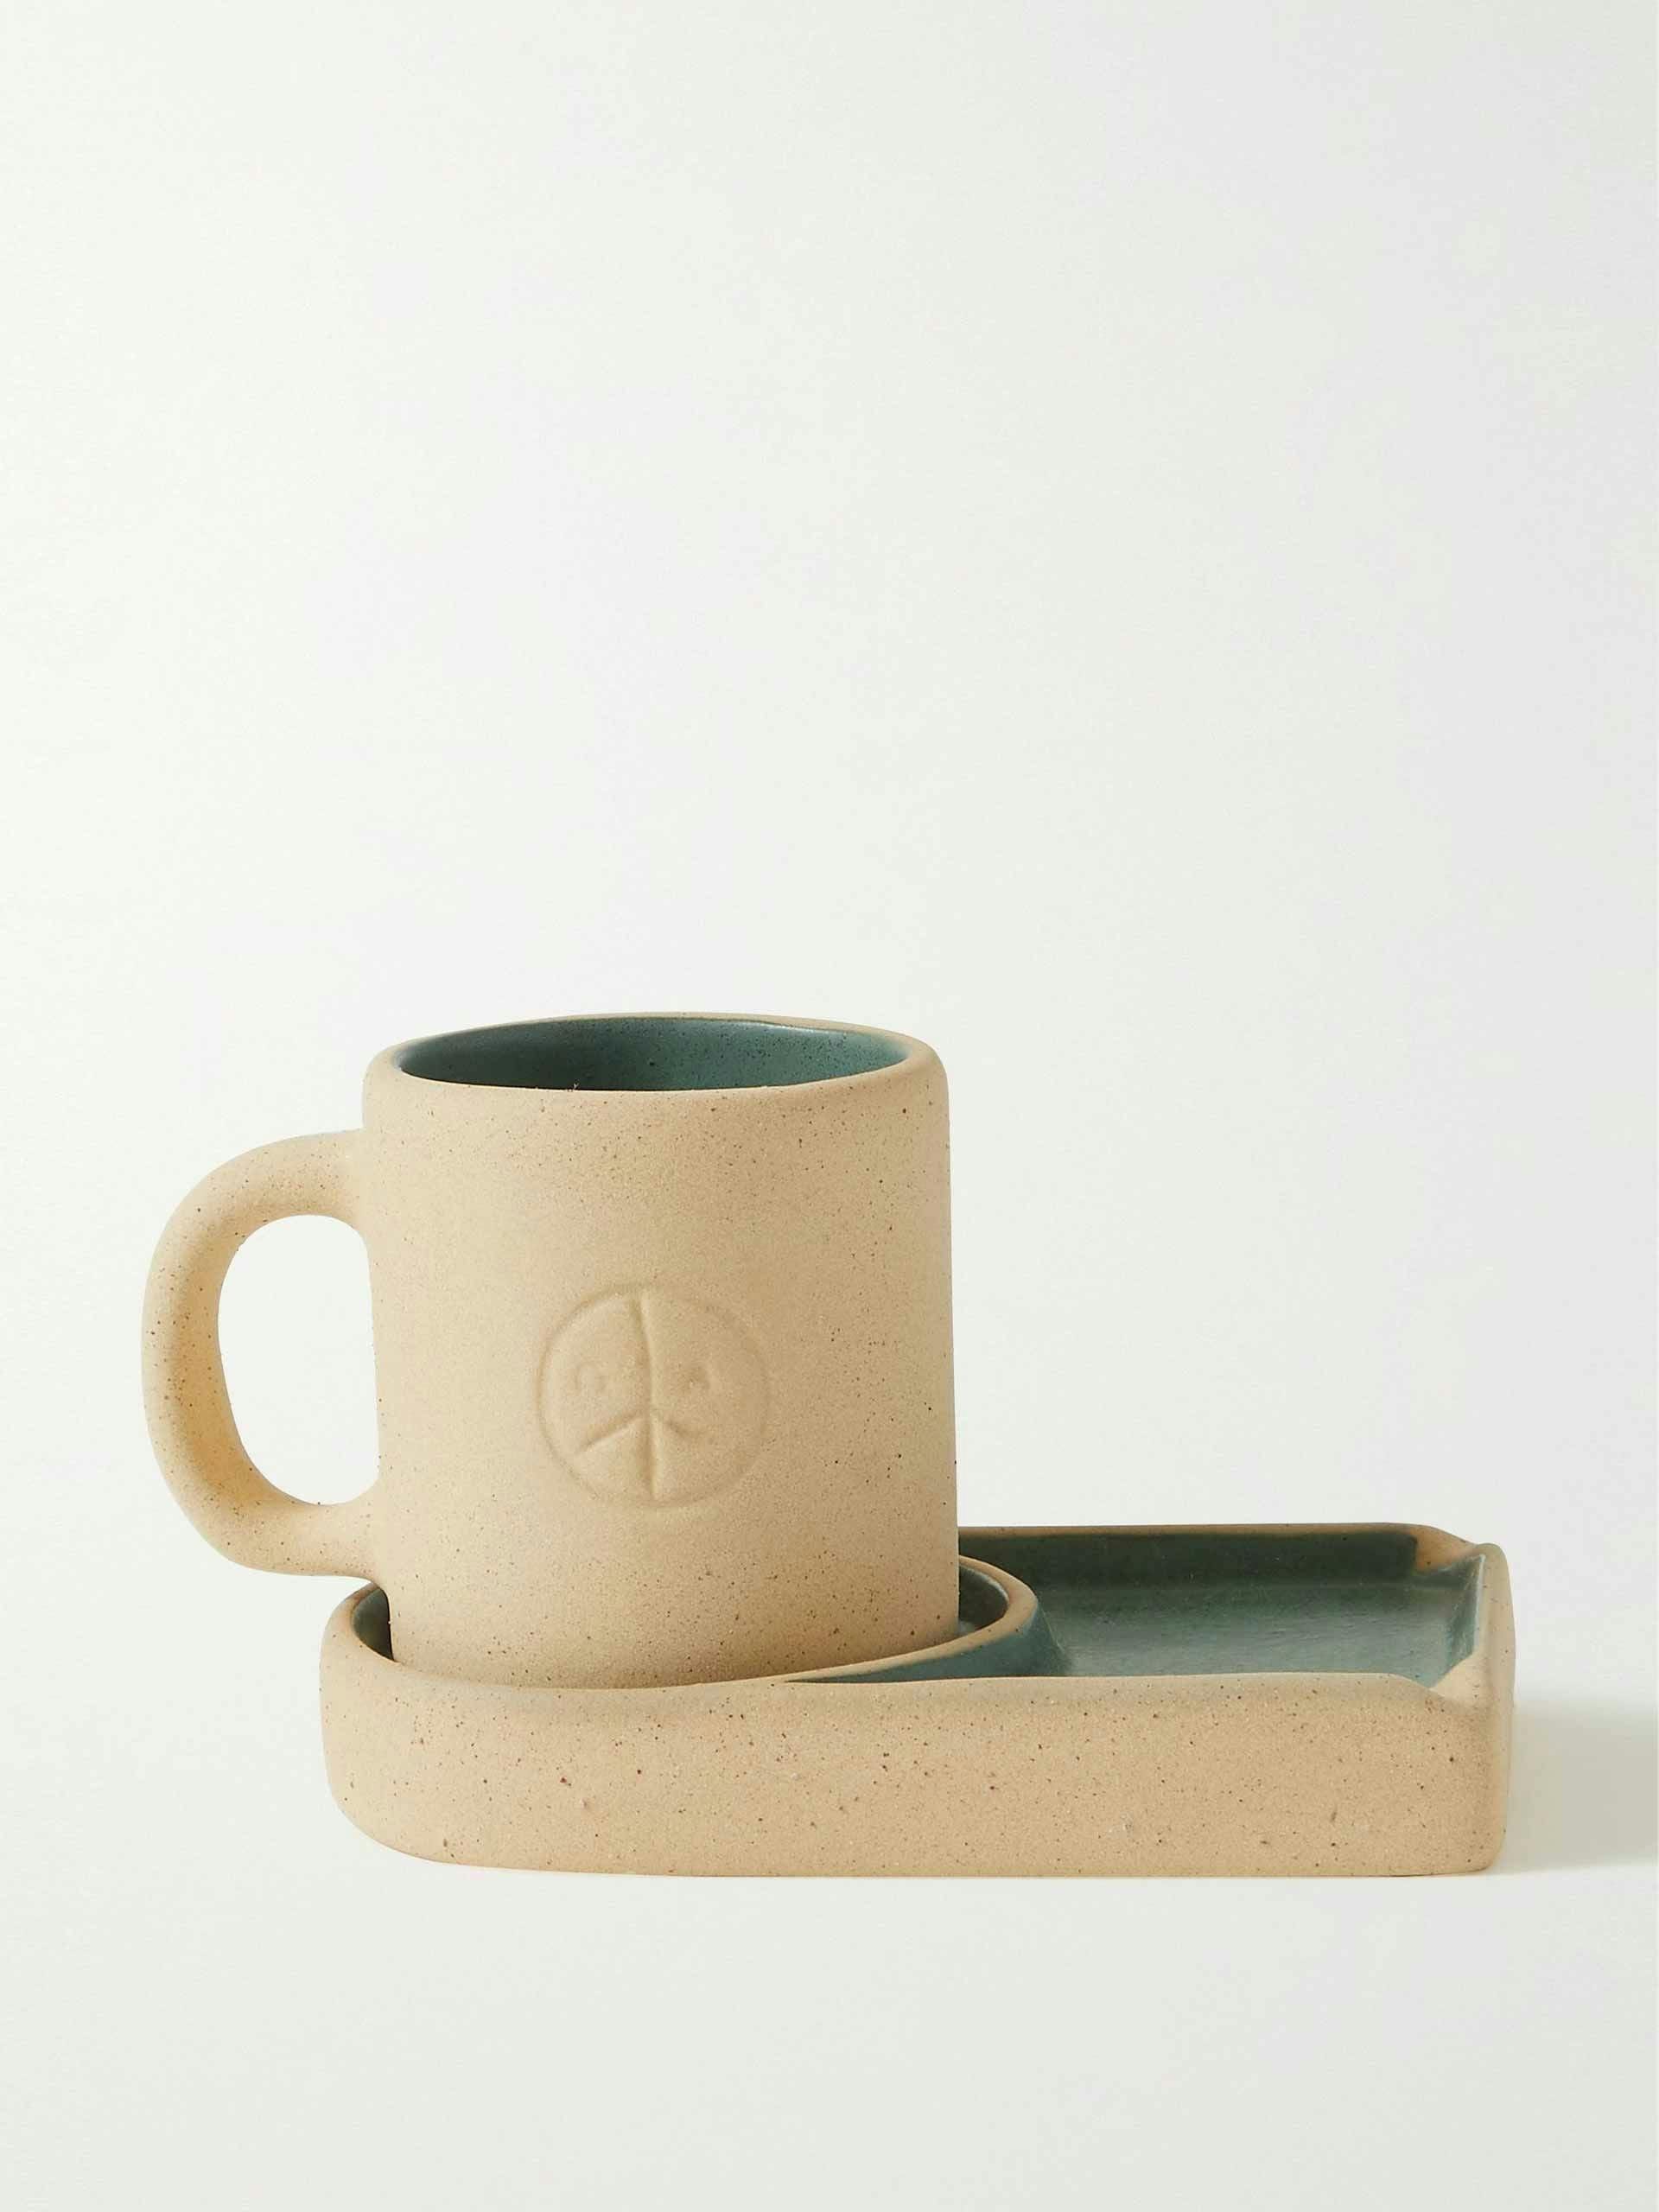 Ceramic mug and ashtray set